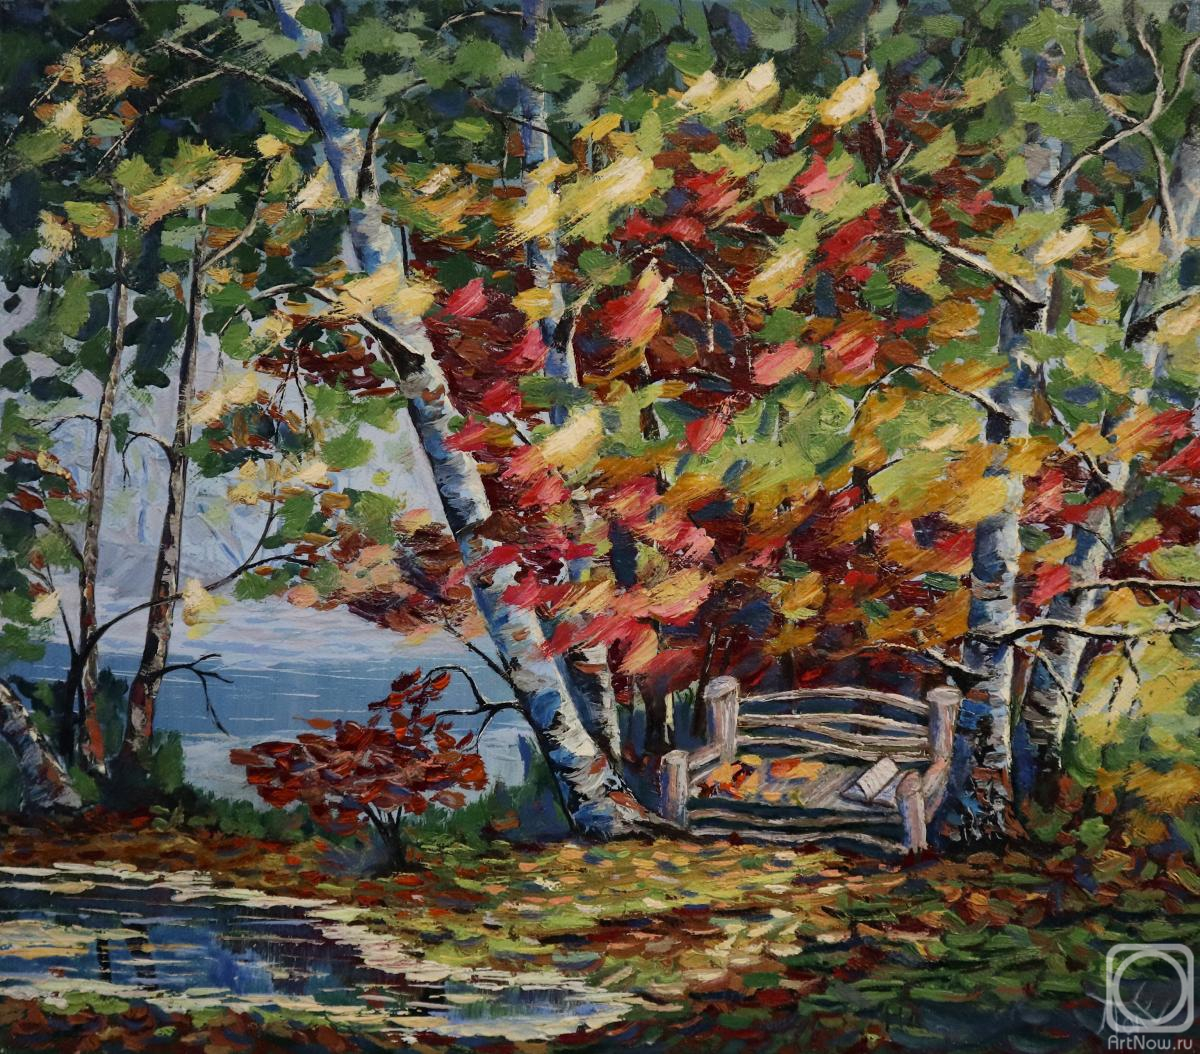 Polischuk Olga. Autumn landscape by the river